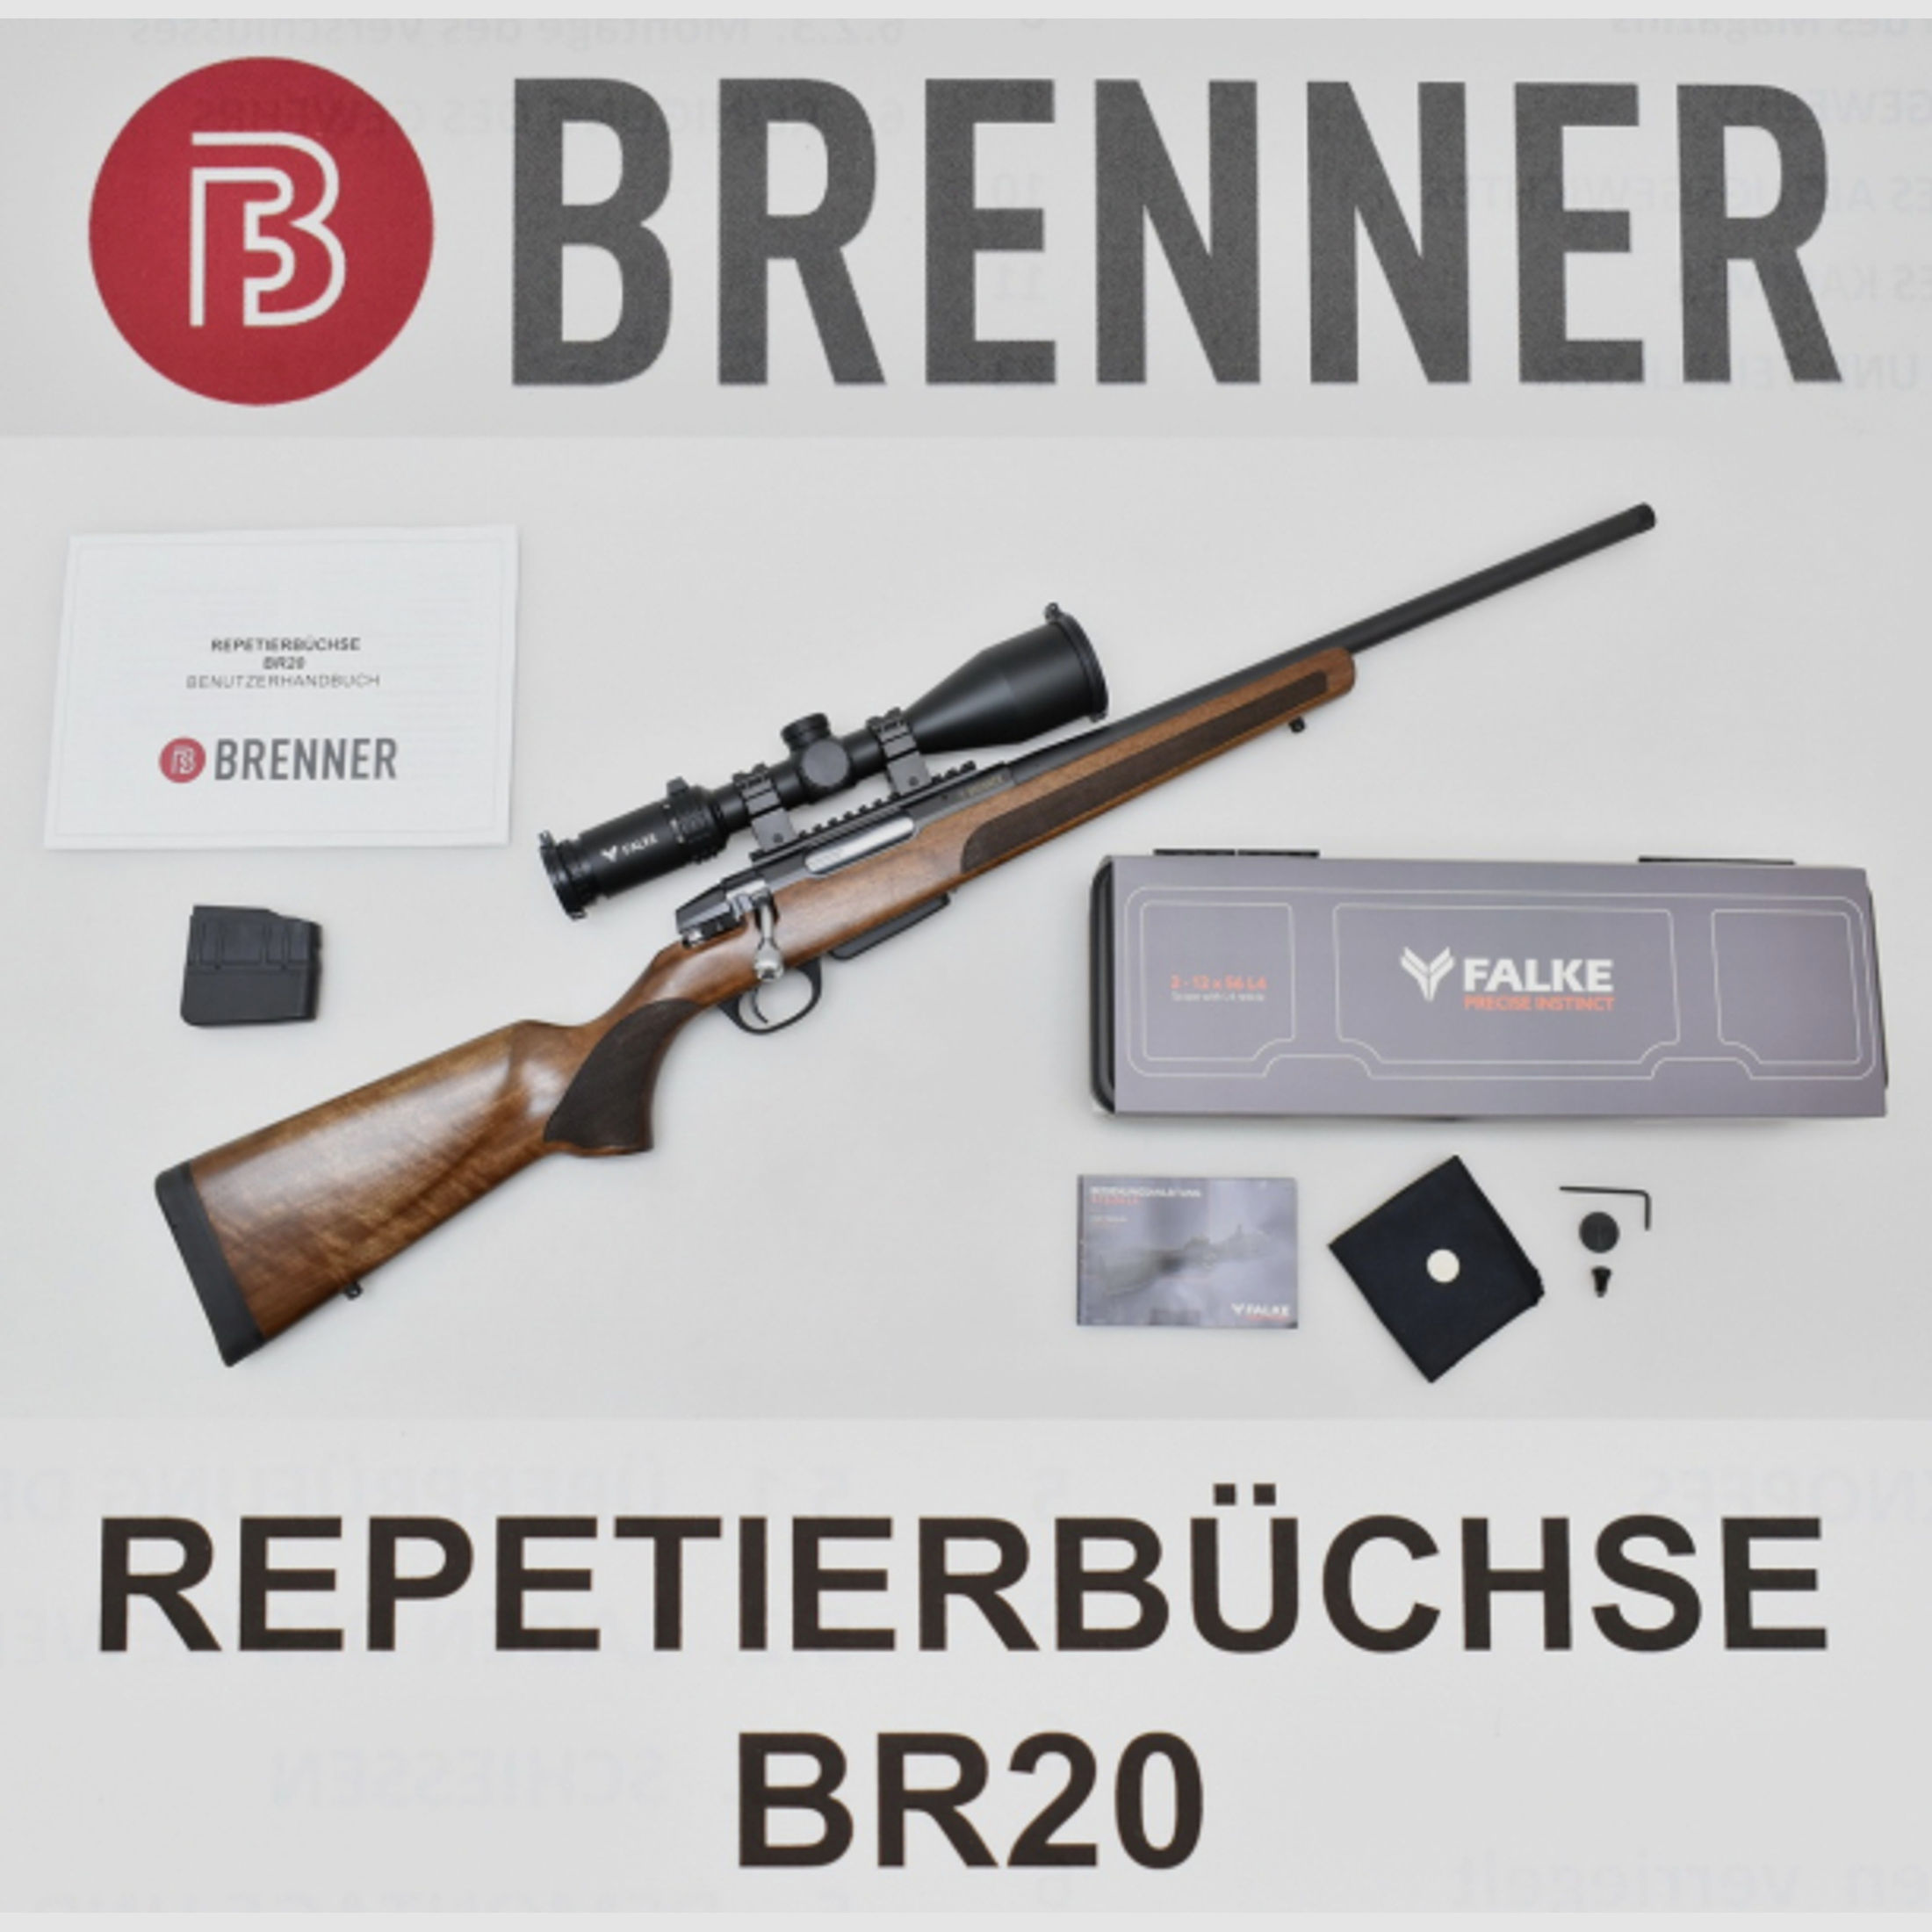 BRENNER BR20 Repetierer im Kal .308 Win. mit FALKE oder AKAH ZF , Gewehrriemen & Koffer